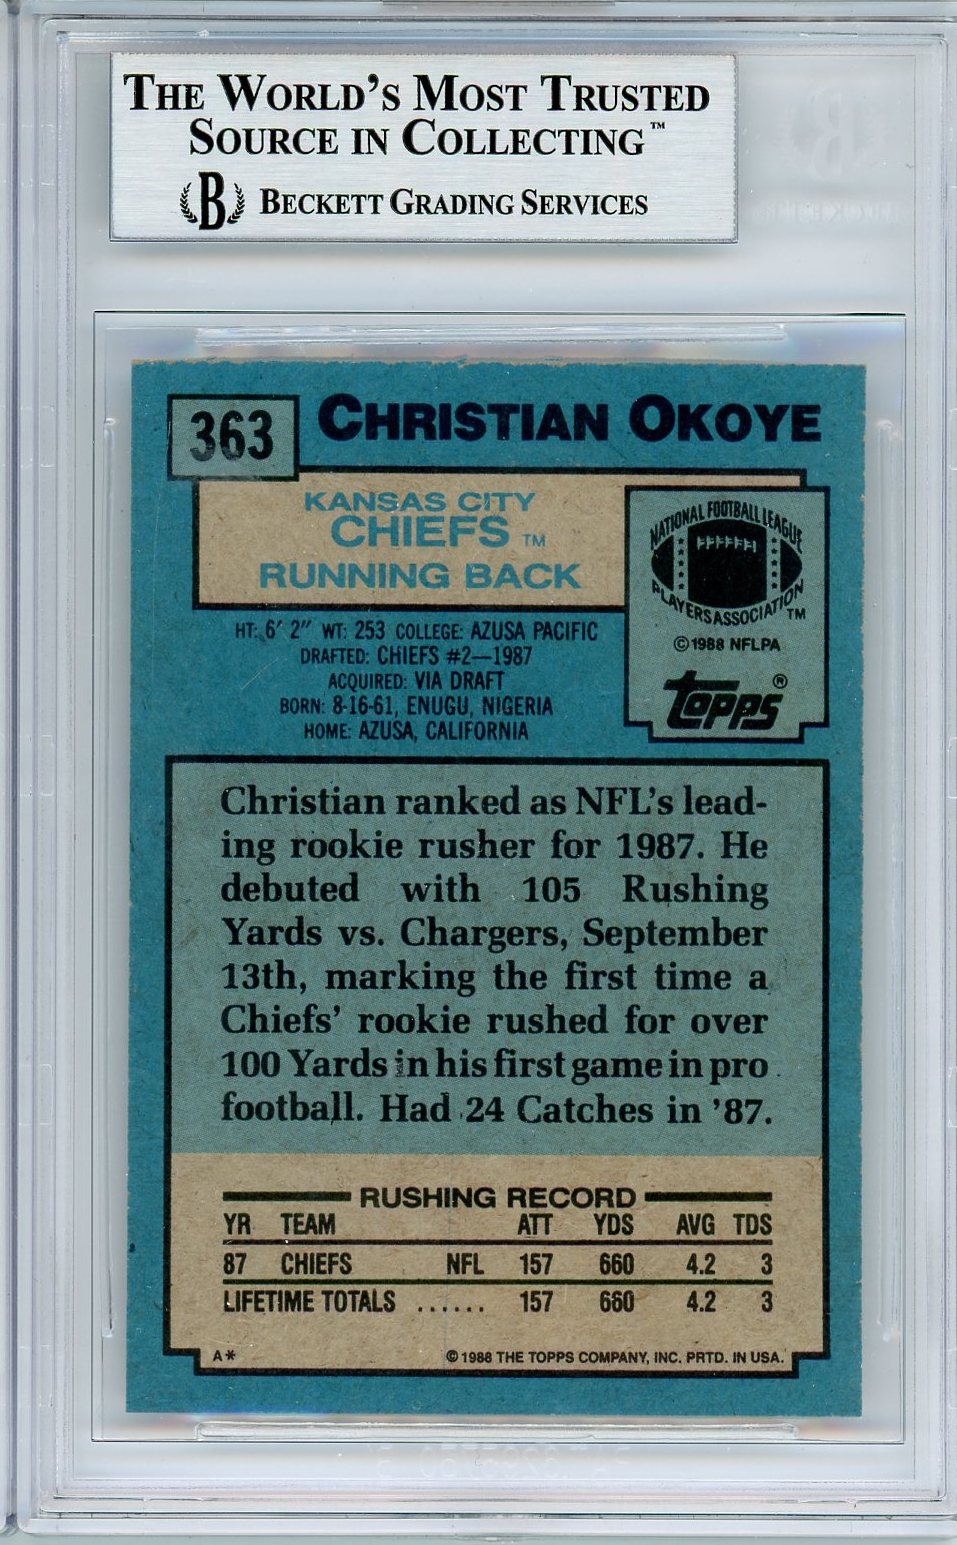 1988 TOPPS CHRISTIAN OKOYE #363 ROOKIE CARD BAS AUTO (455)